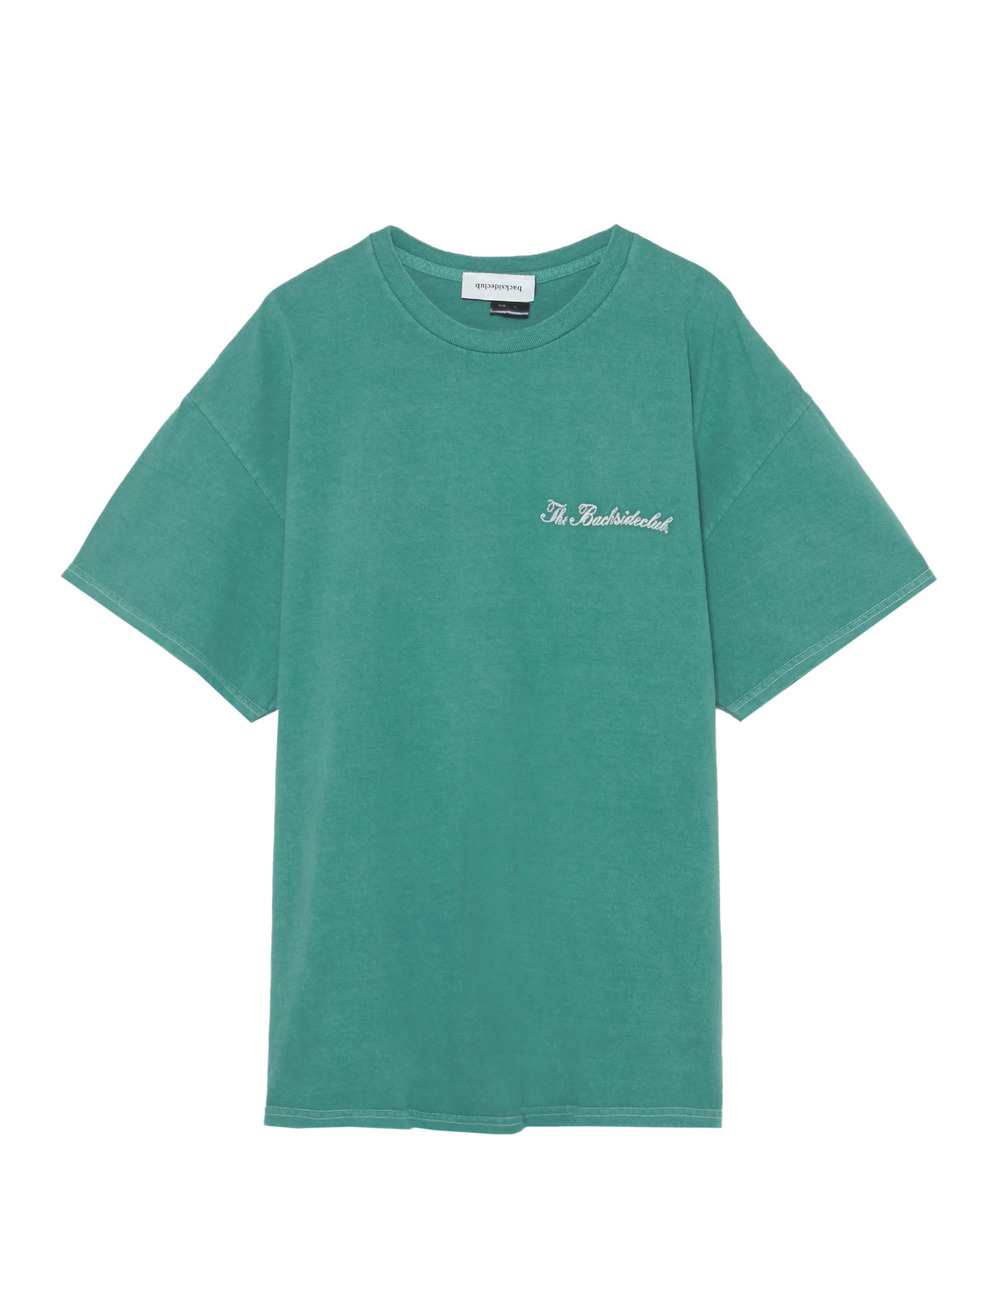 【MEN】BACKSIDE CLUB ロゴ刺繍Tシャツ 詳細画像 グリーン 1